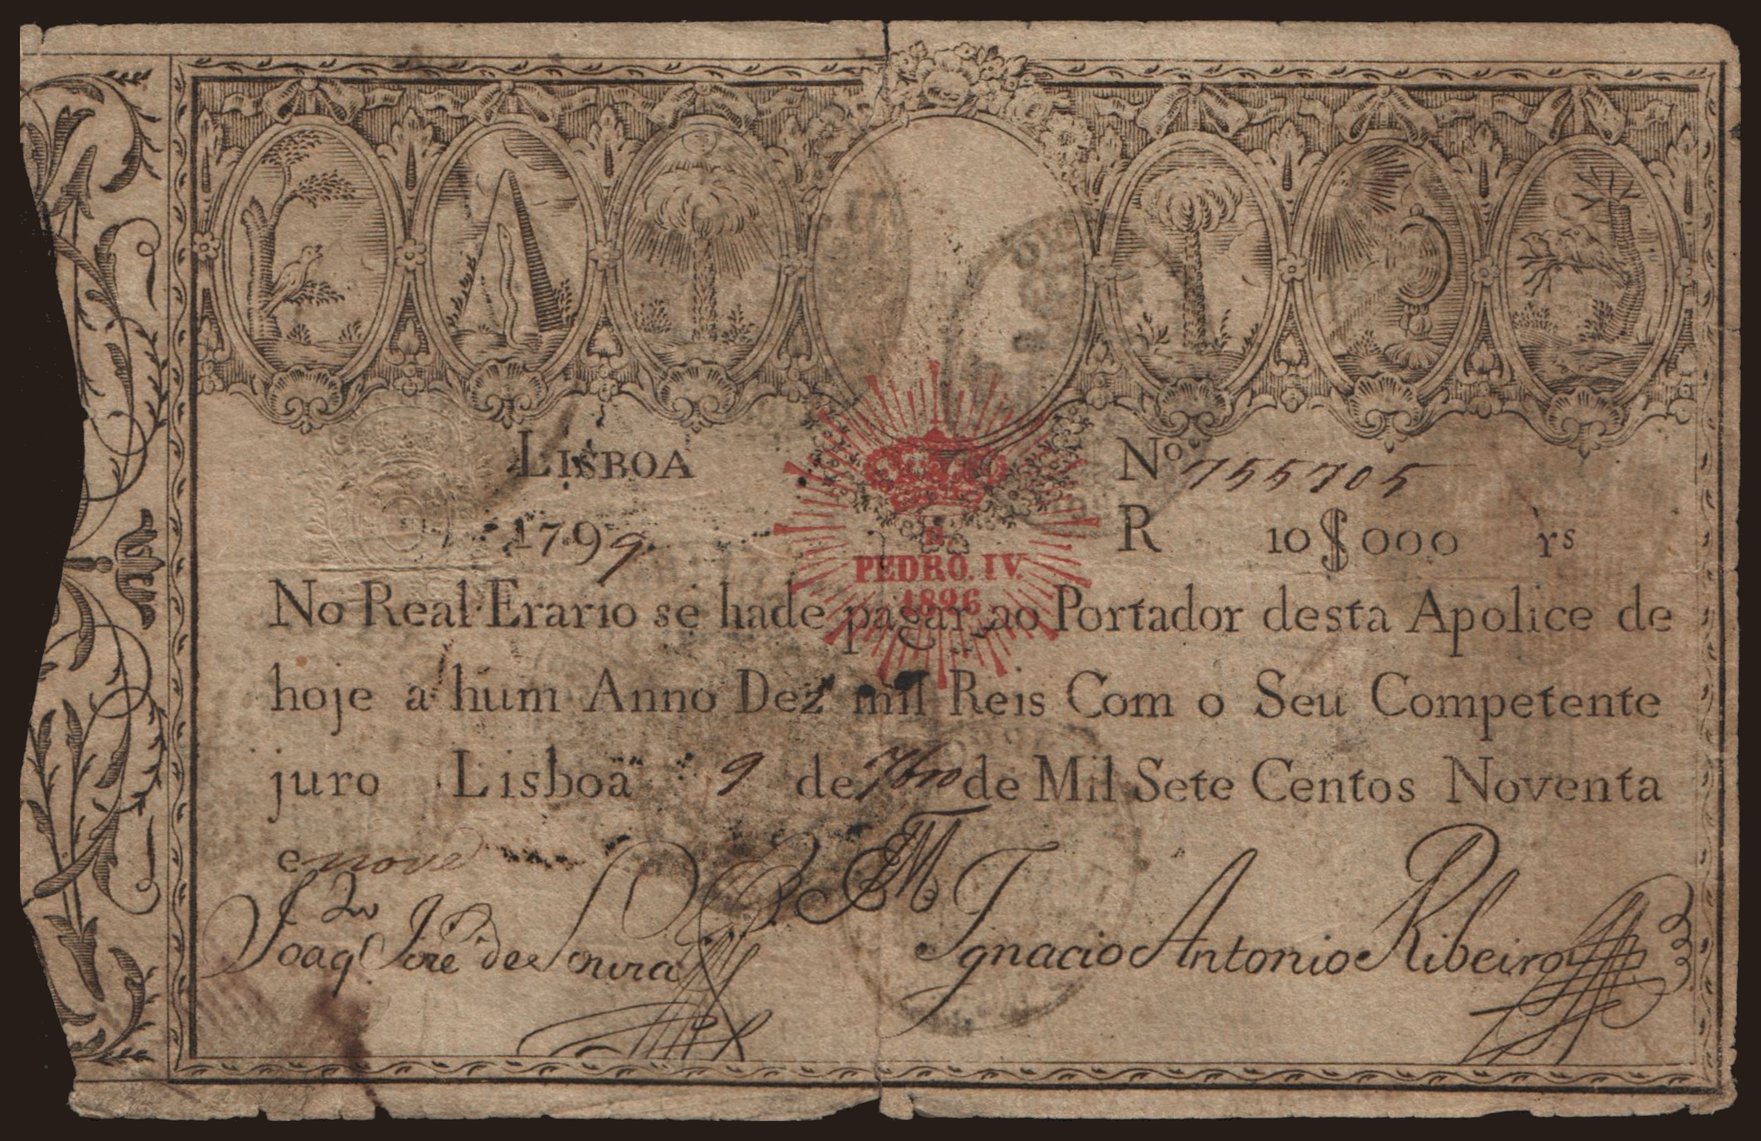 10.000 reis, 1799(1826)